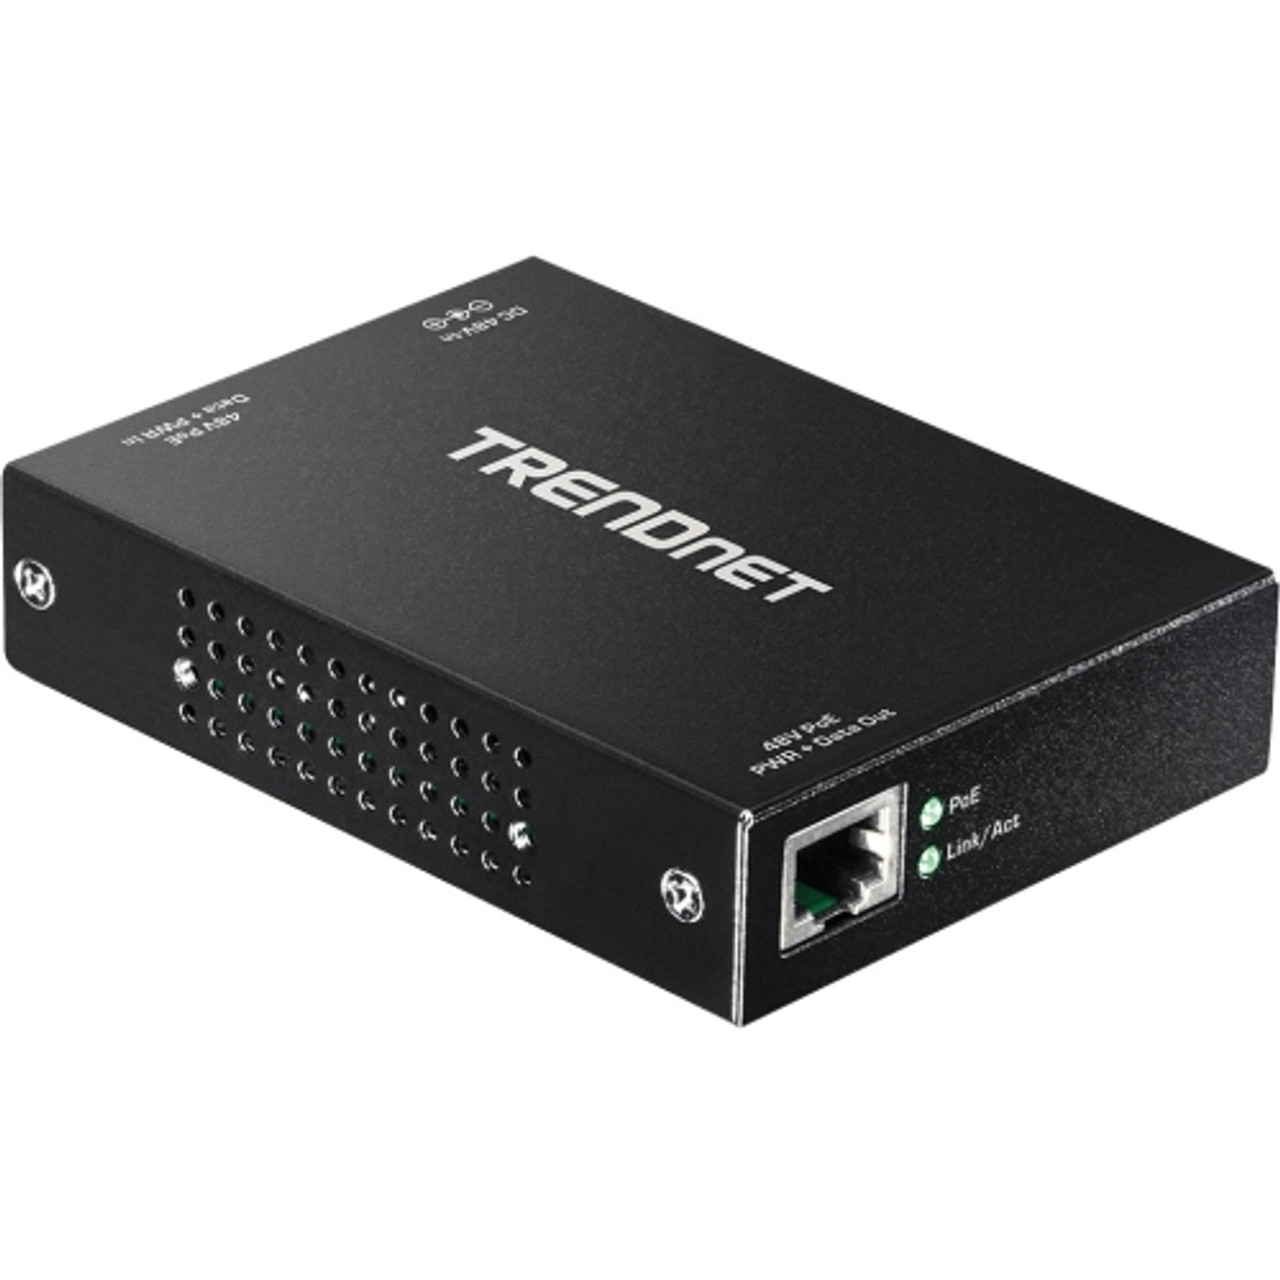 TPE-E100 TRENDnet Gigabit Poe+ Repeater 48port Gigabit Web Smart Poe+Switch (Refurbished)